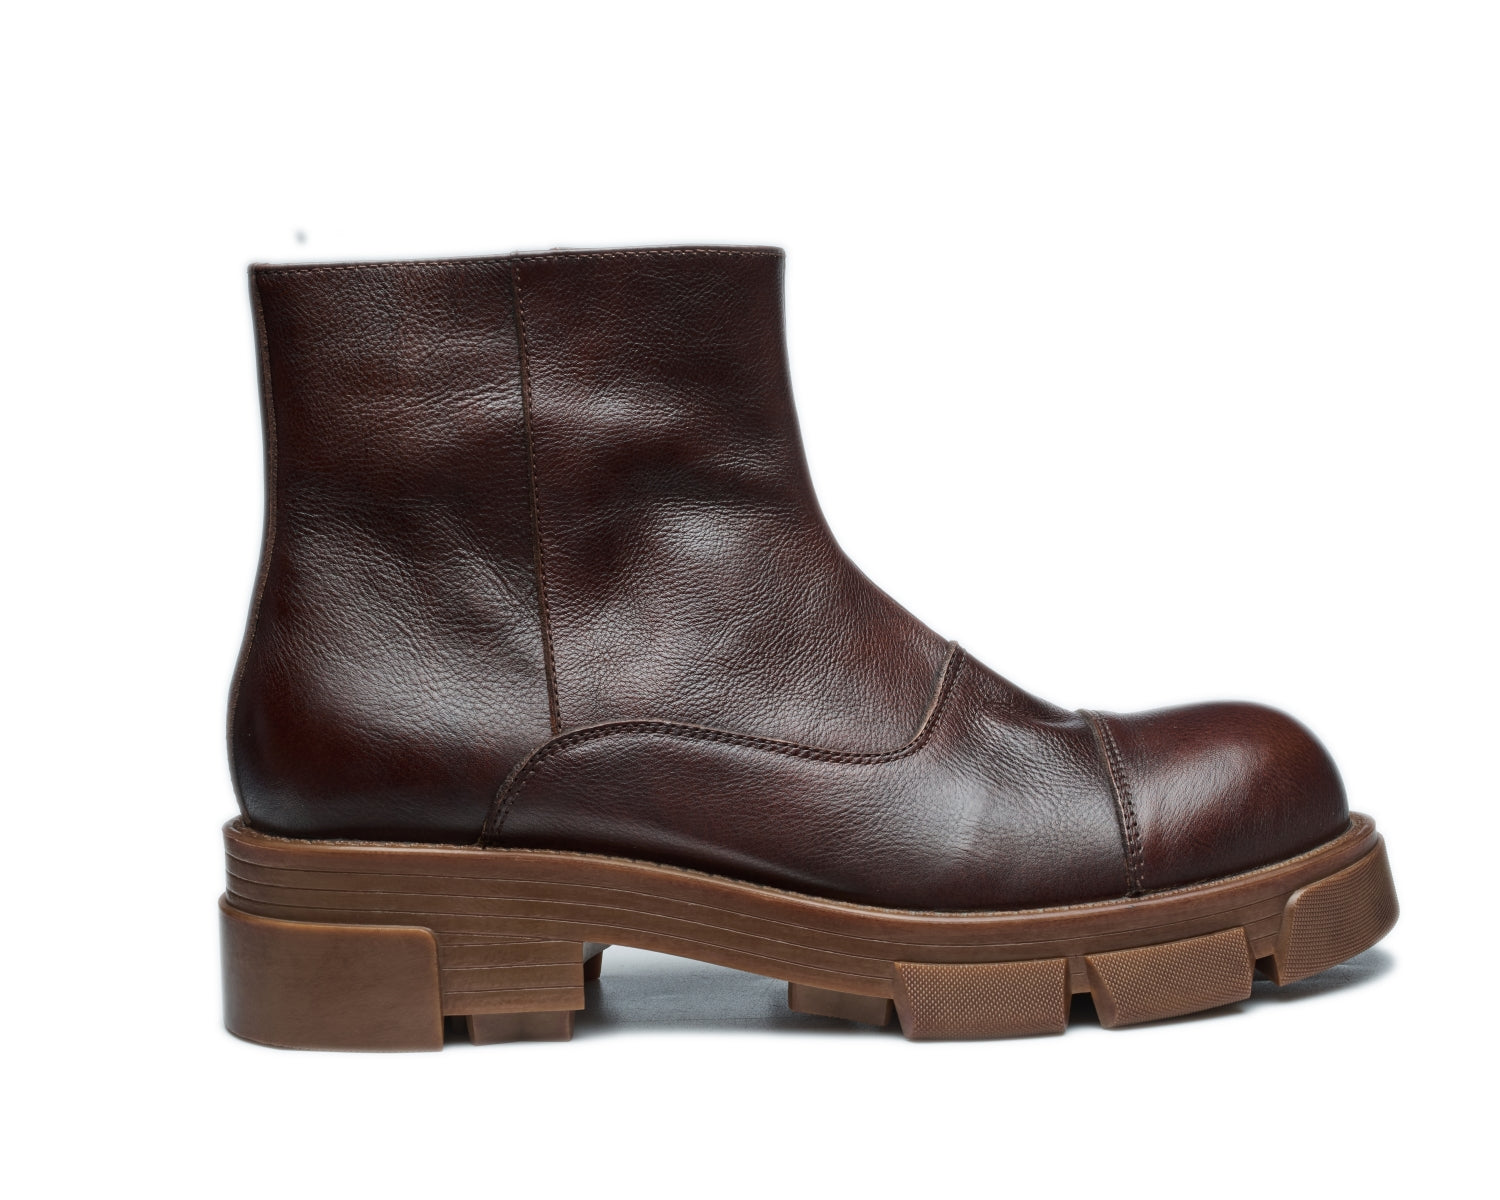 Men's high-top side zip Doc Martens style boots9